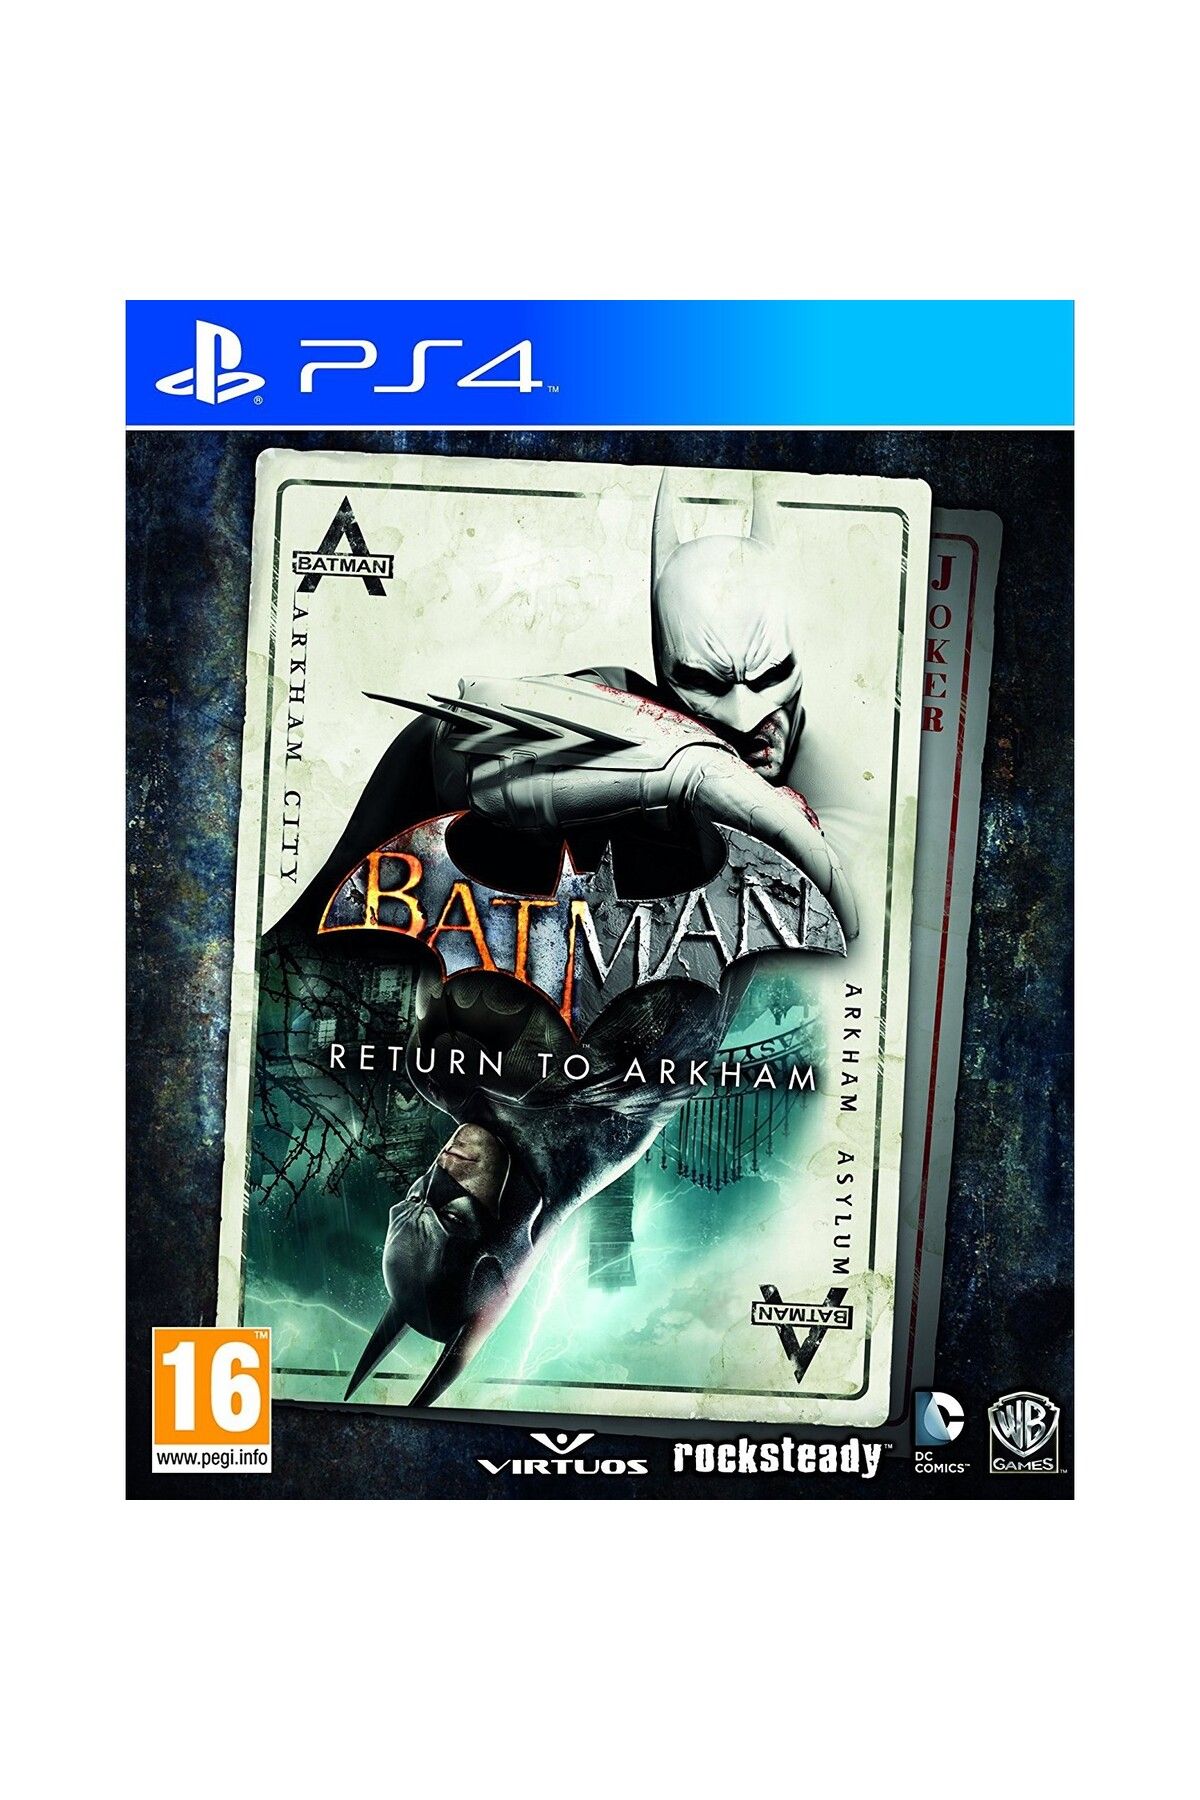 Wb Games Ps4 Batman Return To Arkham - %100 Oyun